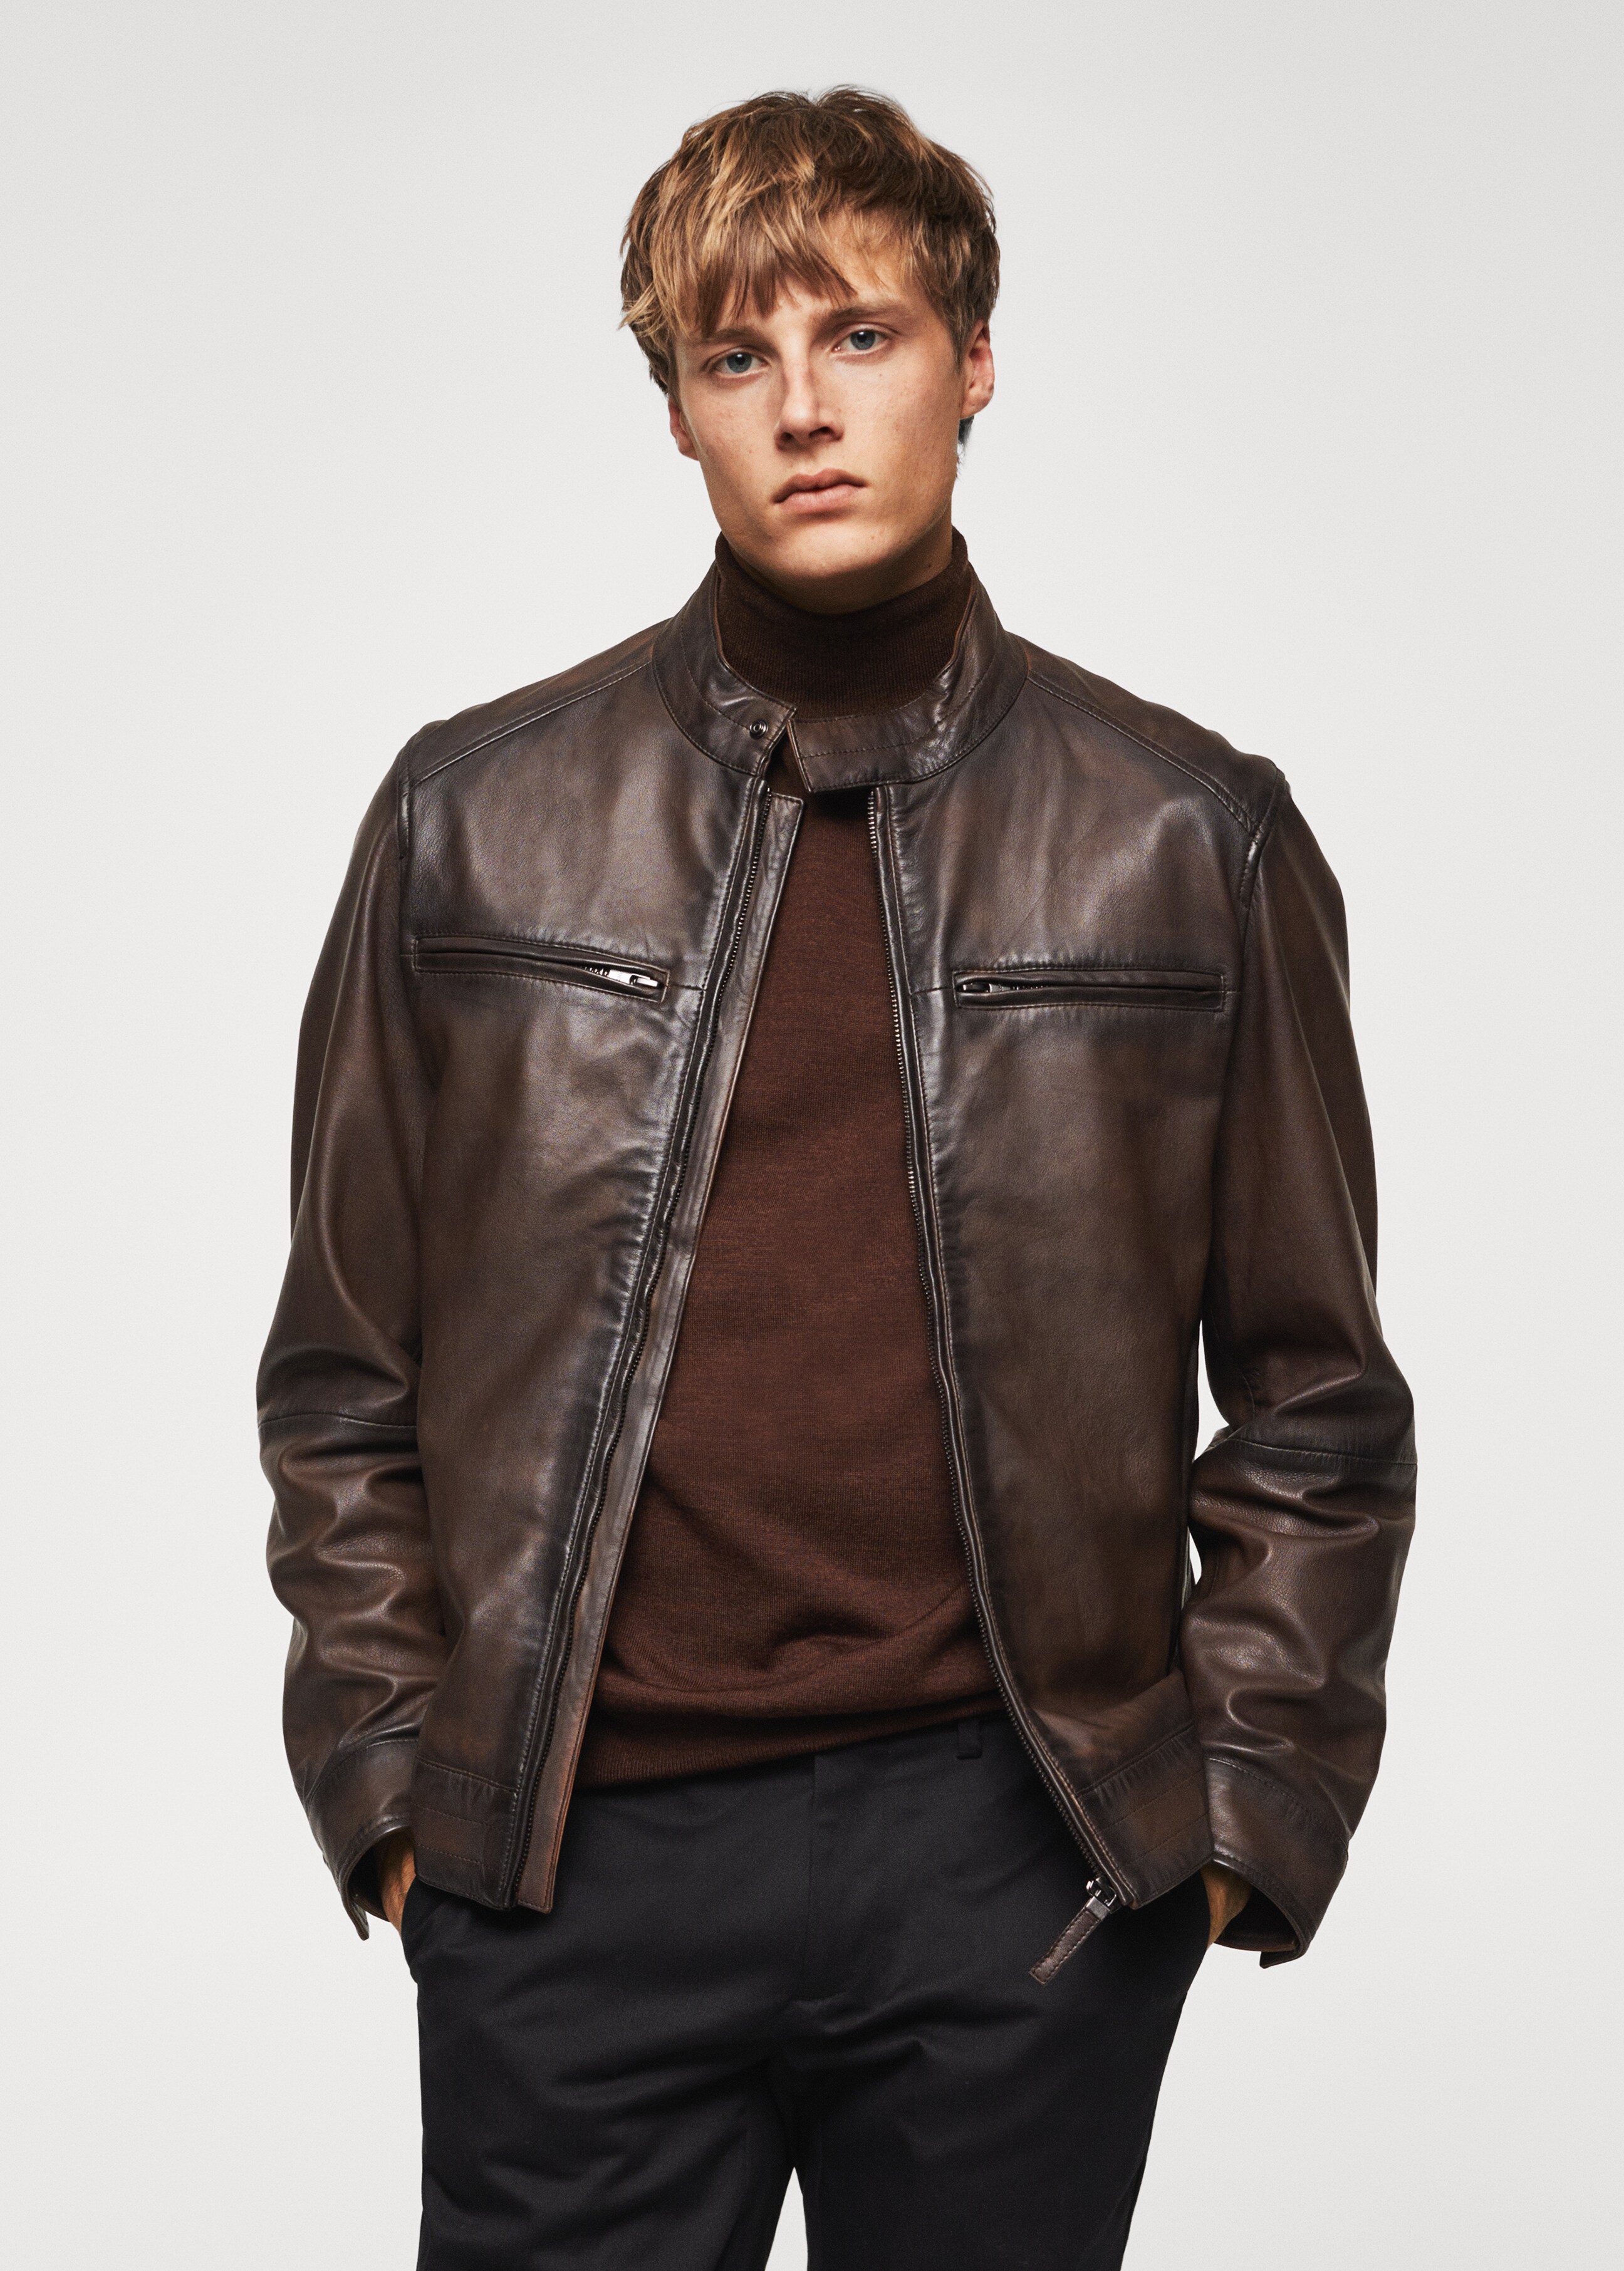 Pocket leather jacket - Medium plane